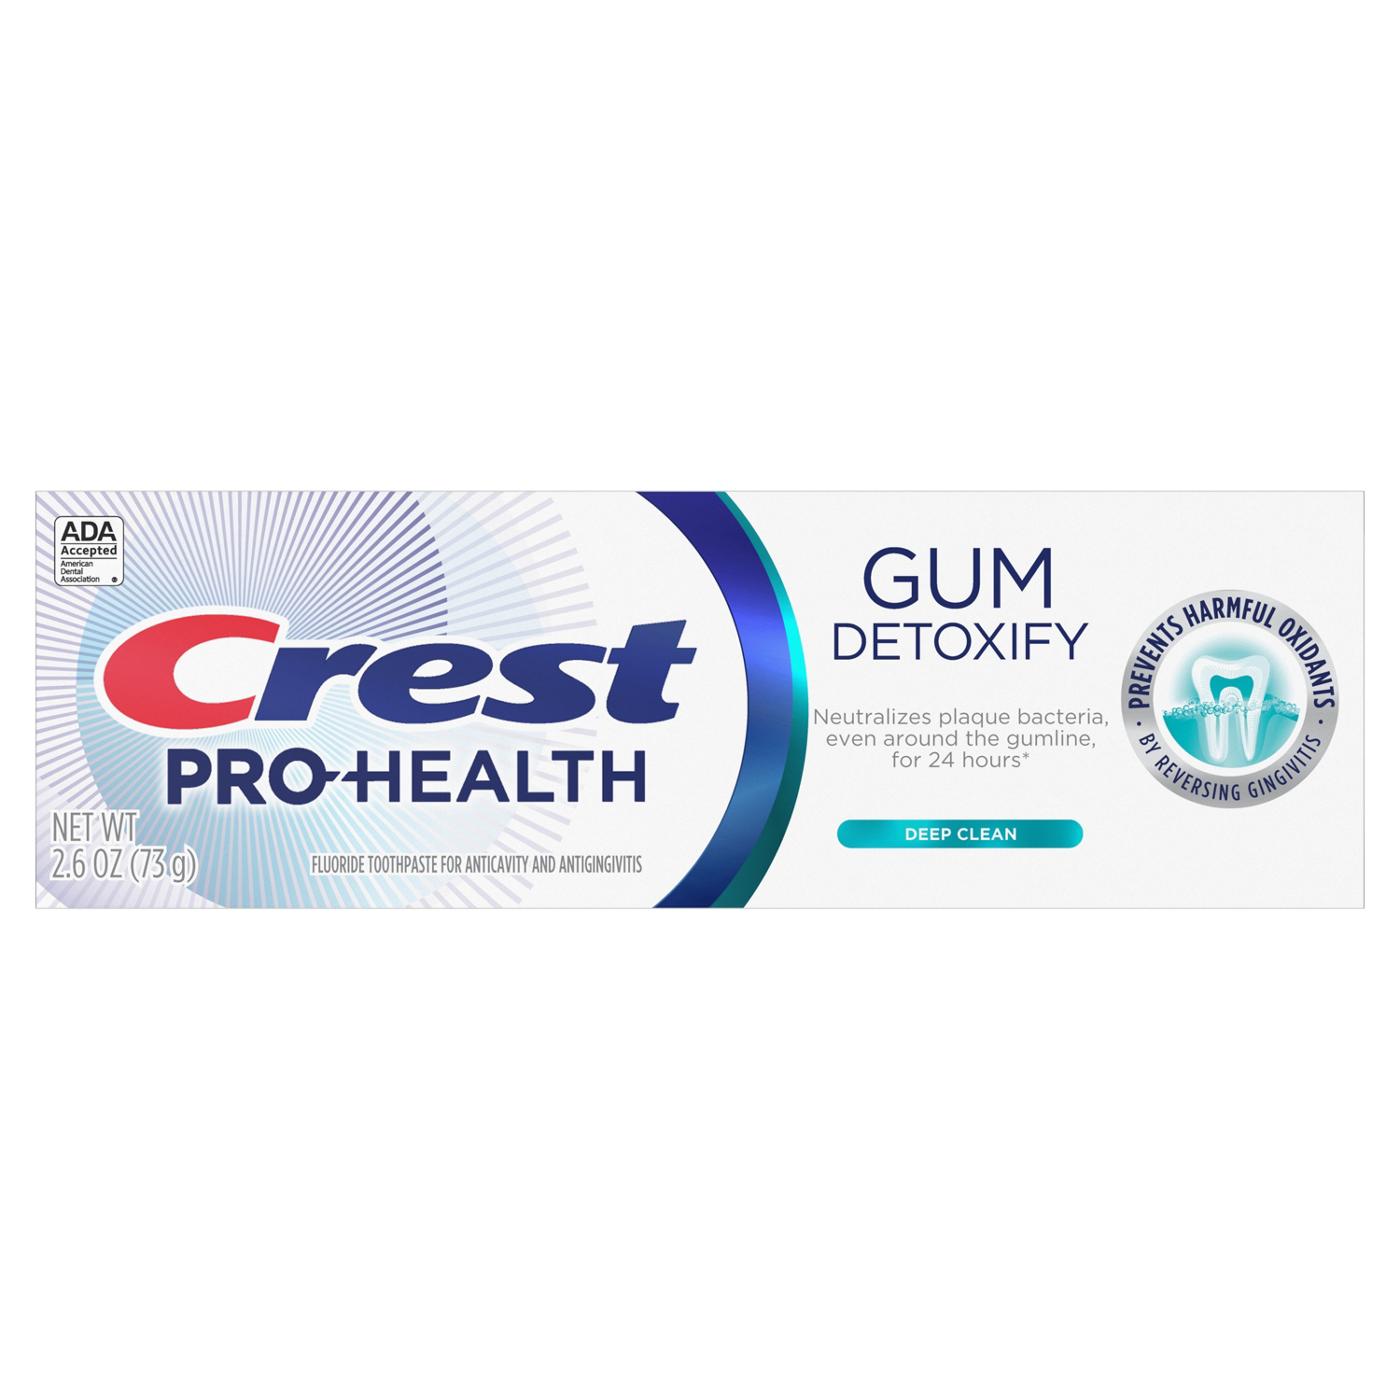 Crest Pro-Health Gum Detoxify Toothpaste - Deep Clean ; image 1 of 8